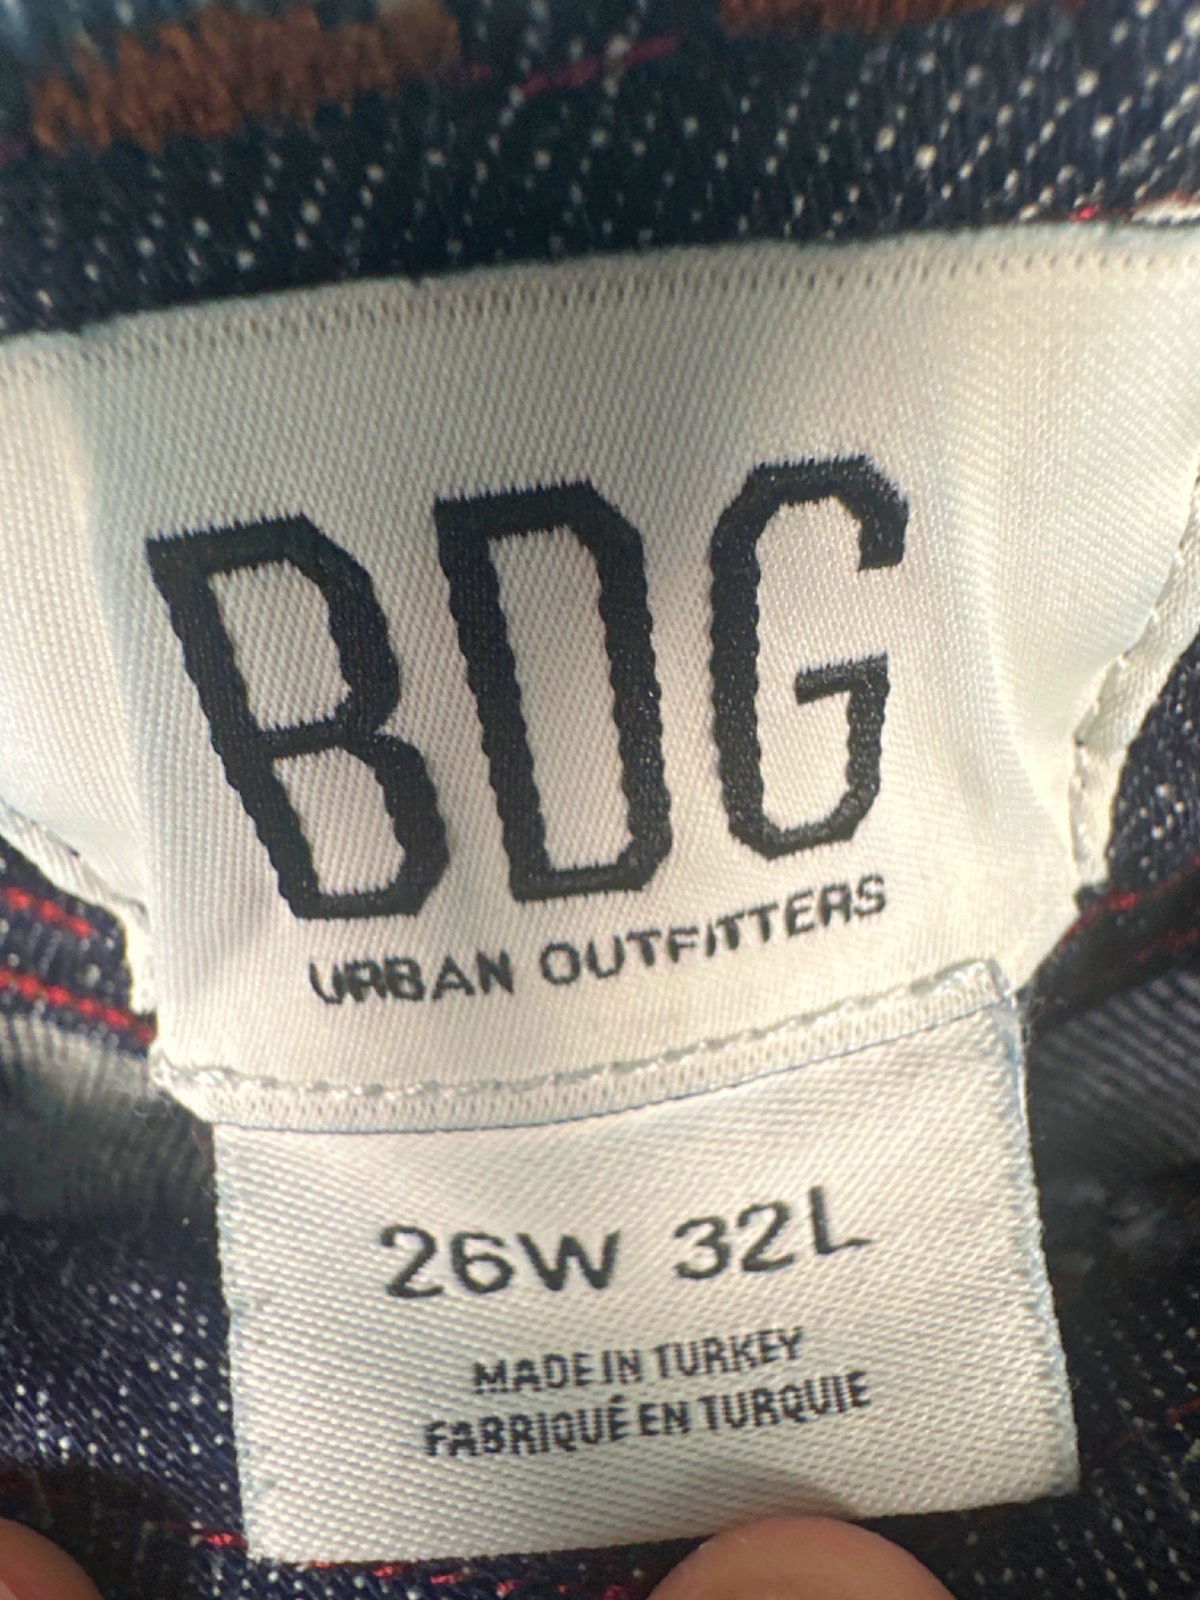 BDG Dark Denim Brooke Bootflare Jeans W26 32L